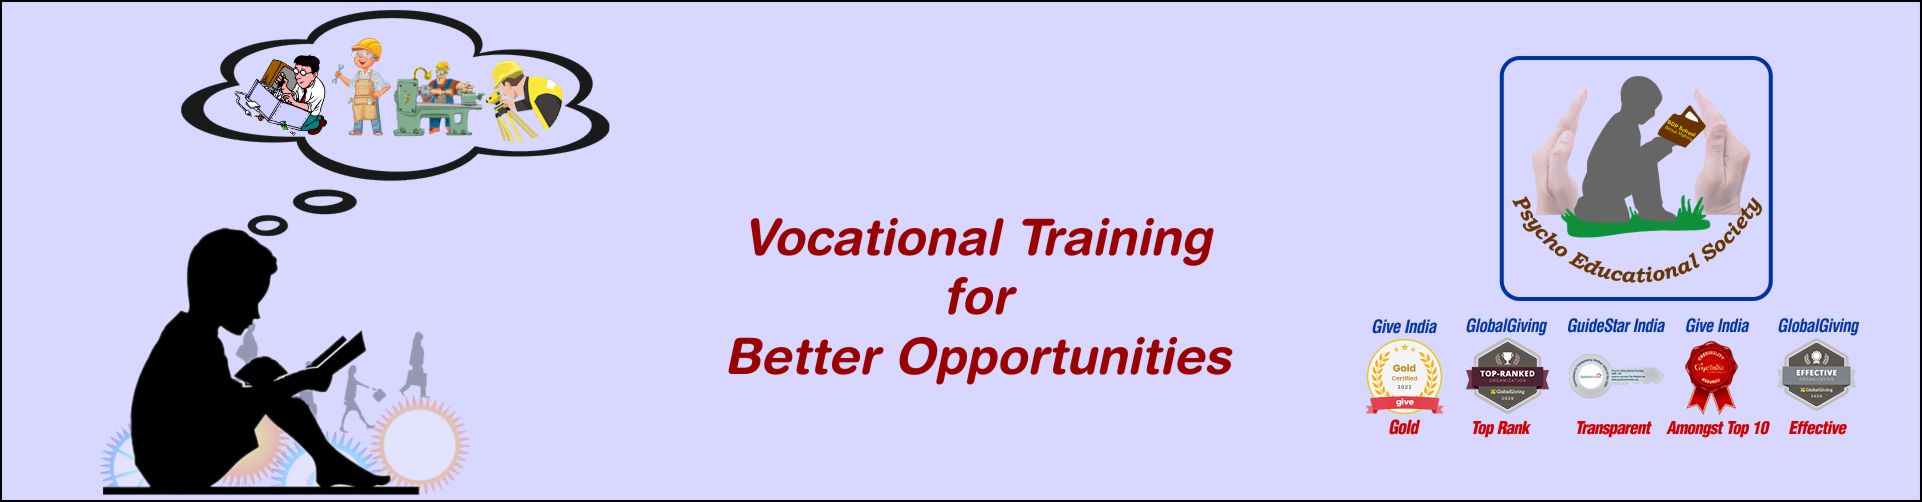 Vocational-Training